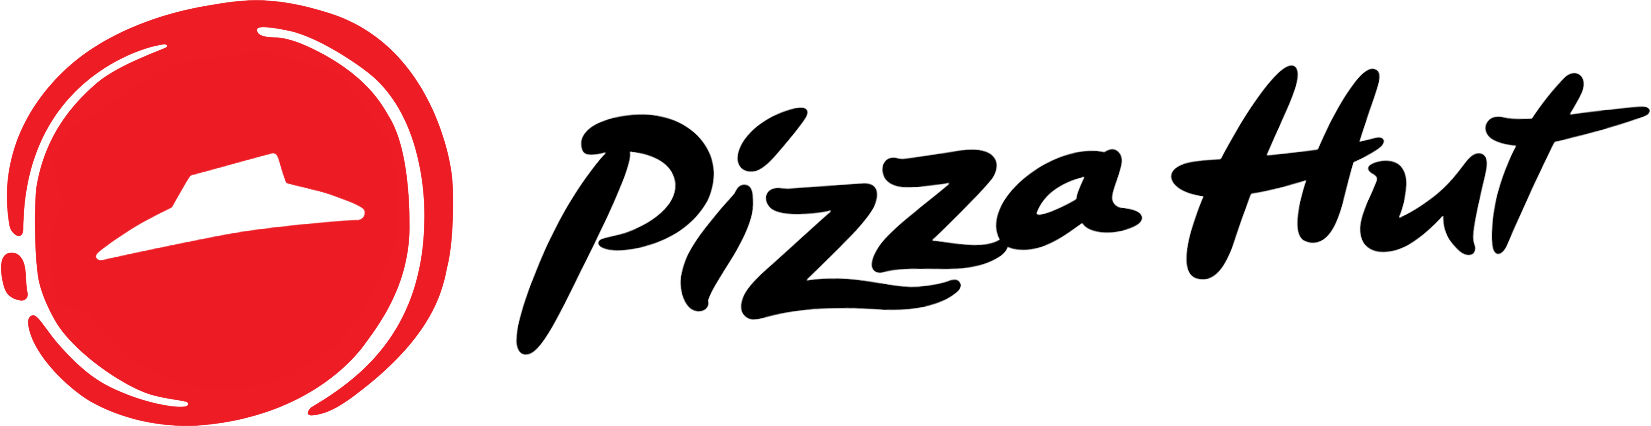 Image Result For Pizza Hut Logo Png - Pizza Hut Logo Png (1651x426)